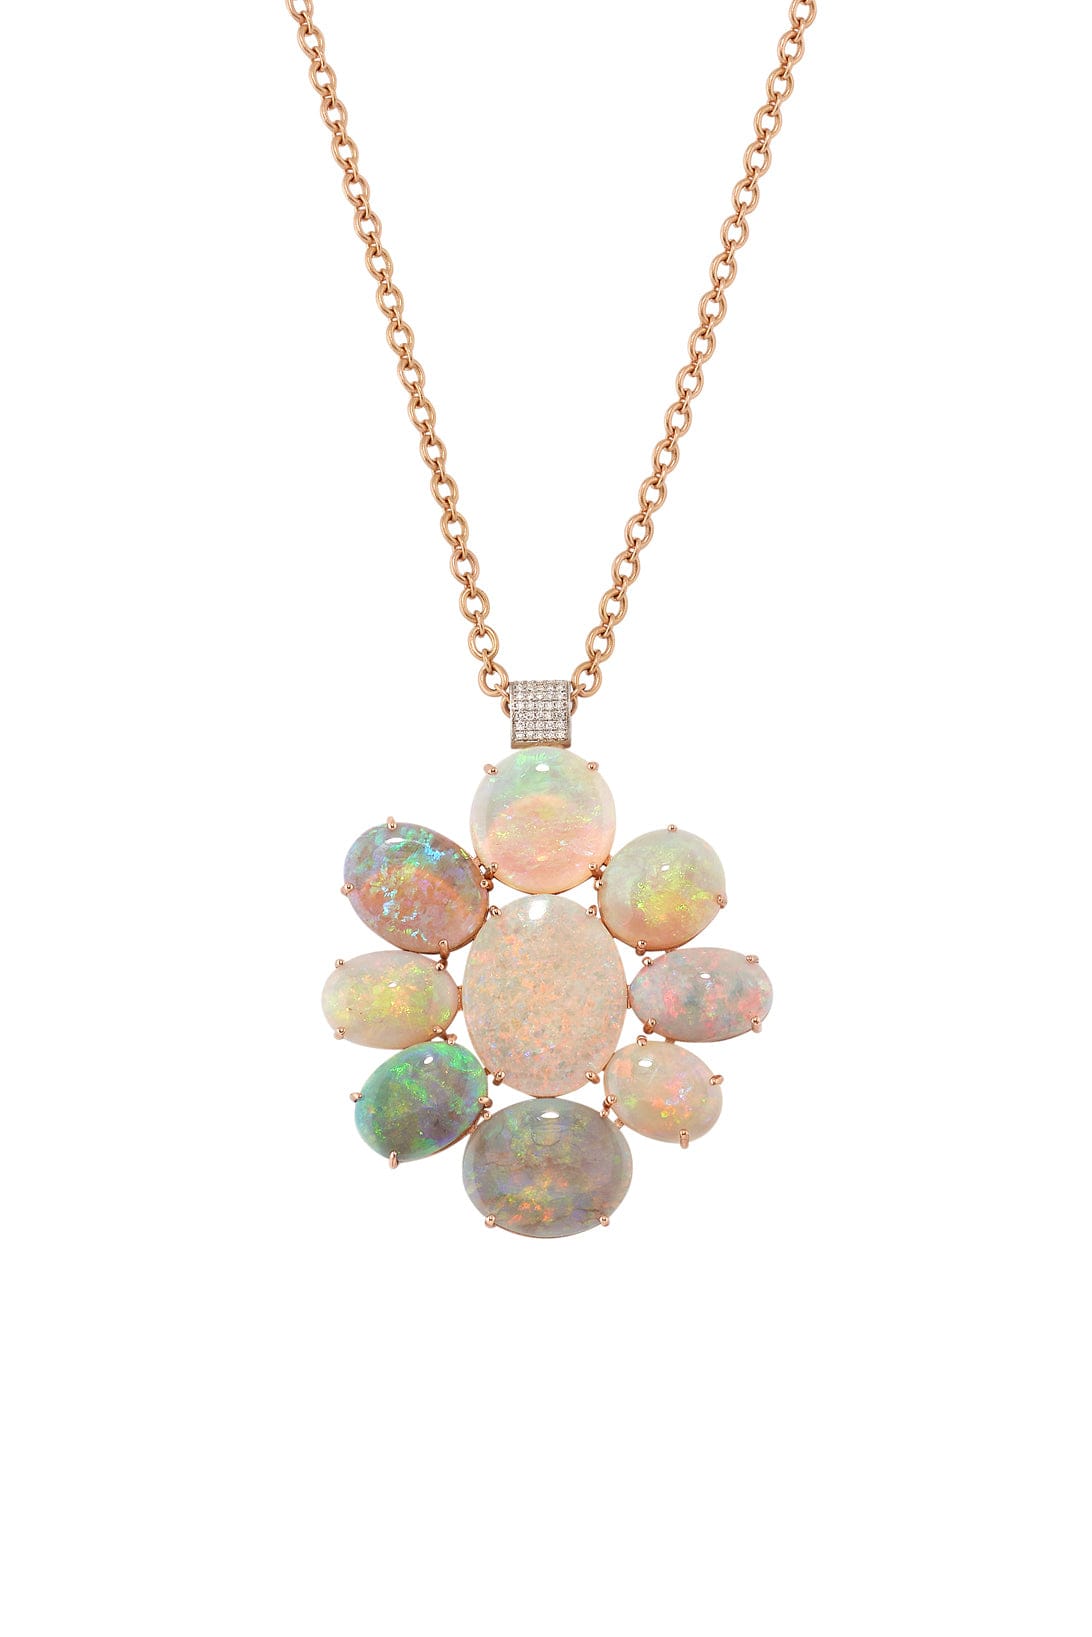 IRENE NEUWIRTH JEWELRY-Opal Pendant Necklace-ROSE GOLD